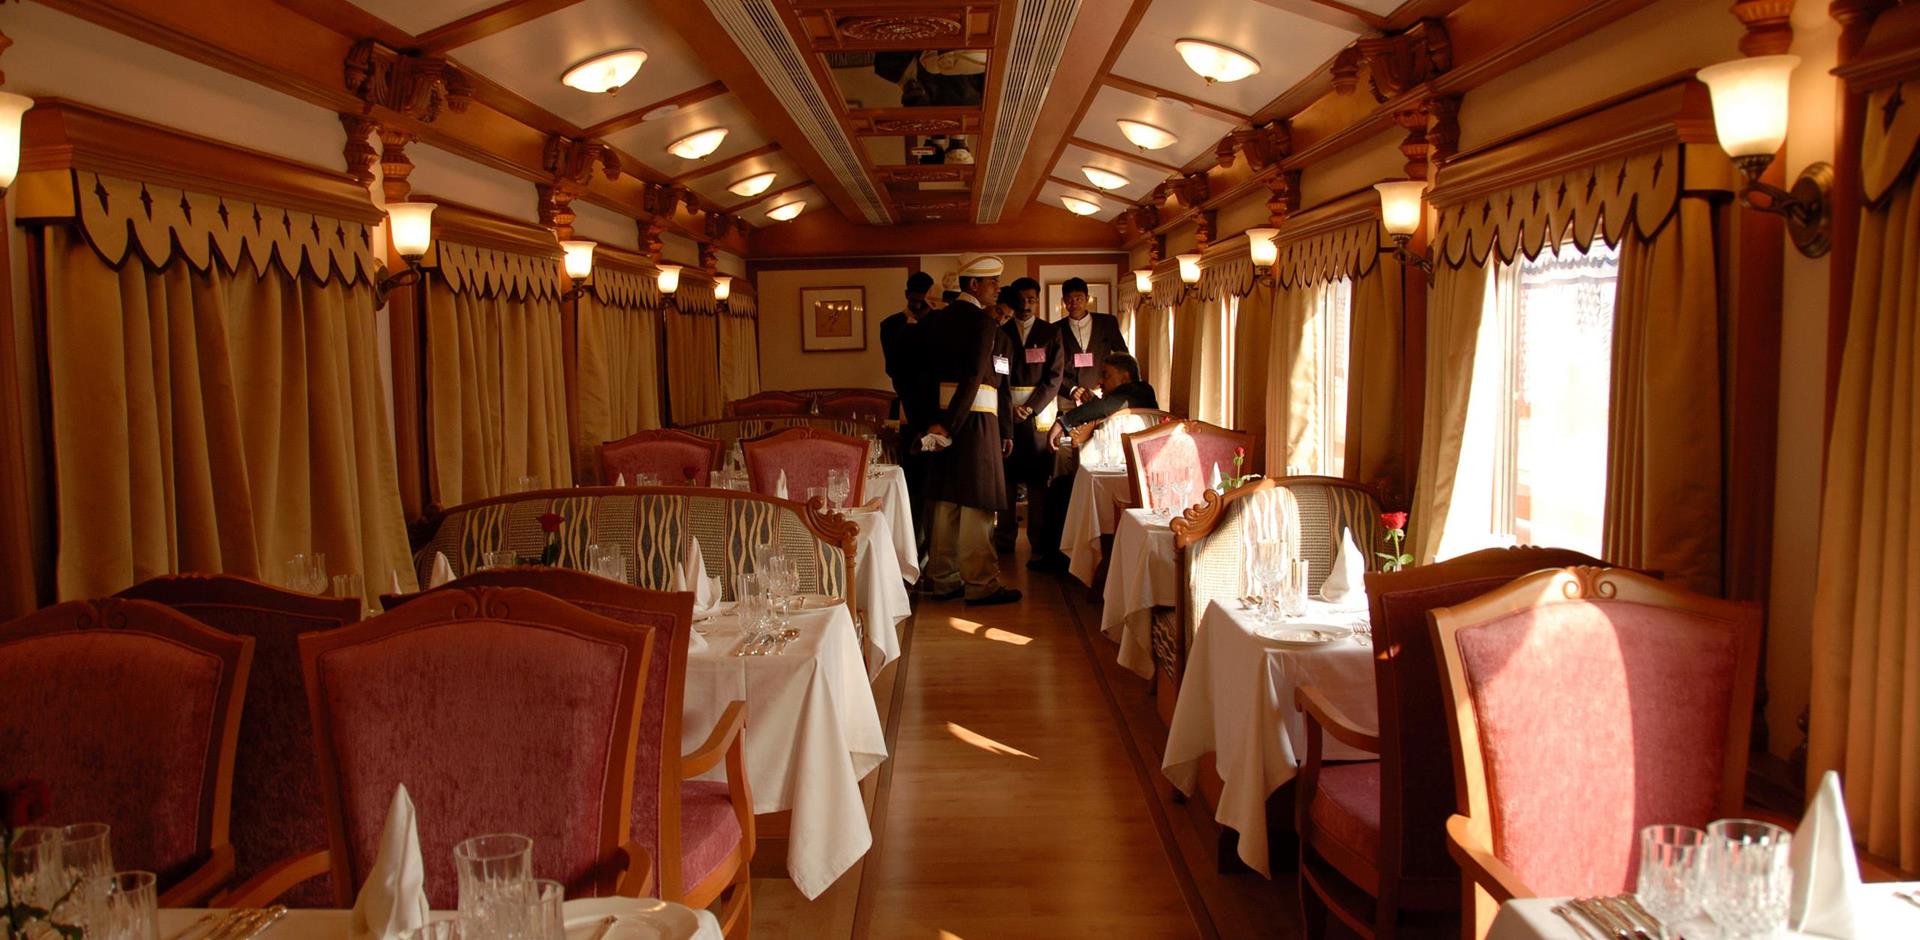 Golden Chariot Train, India